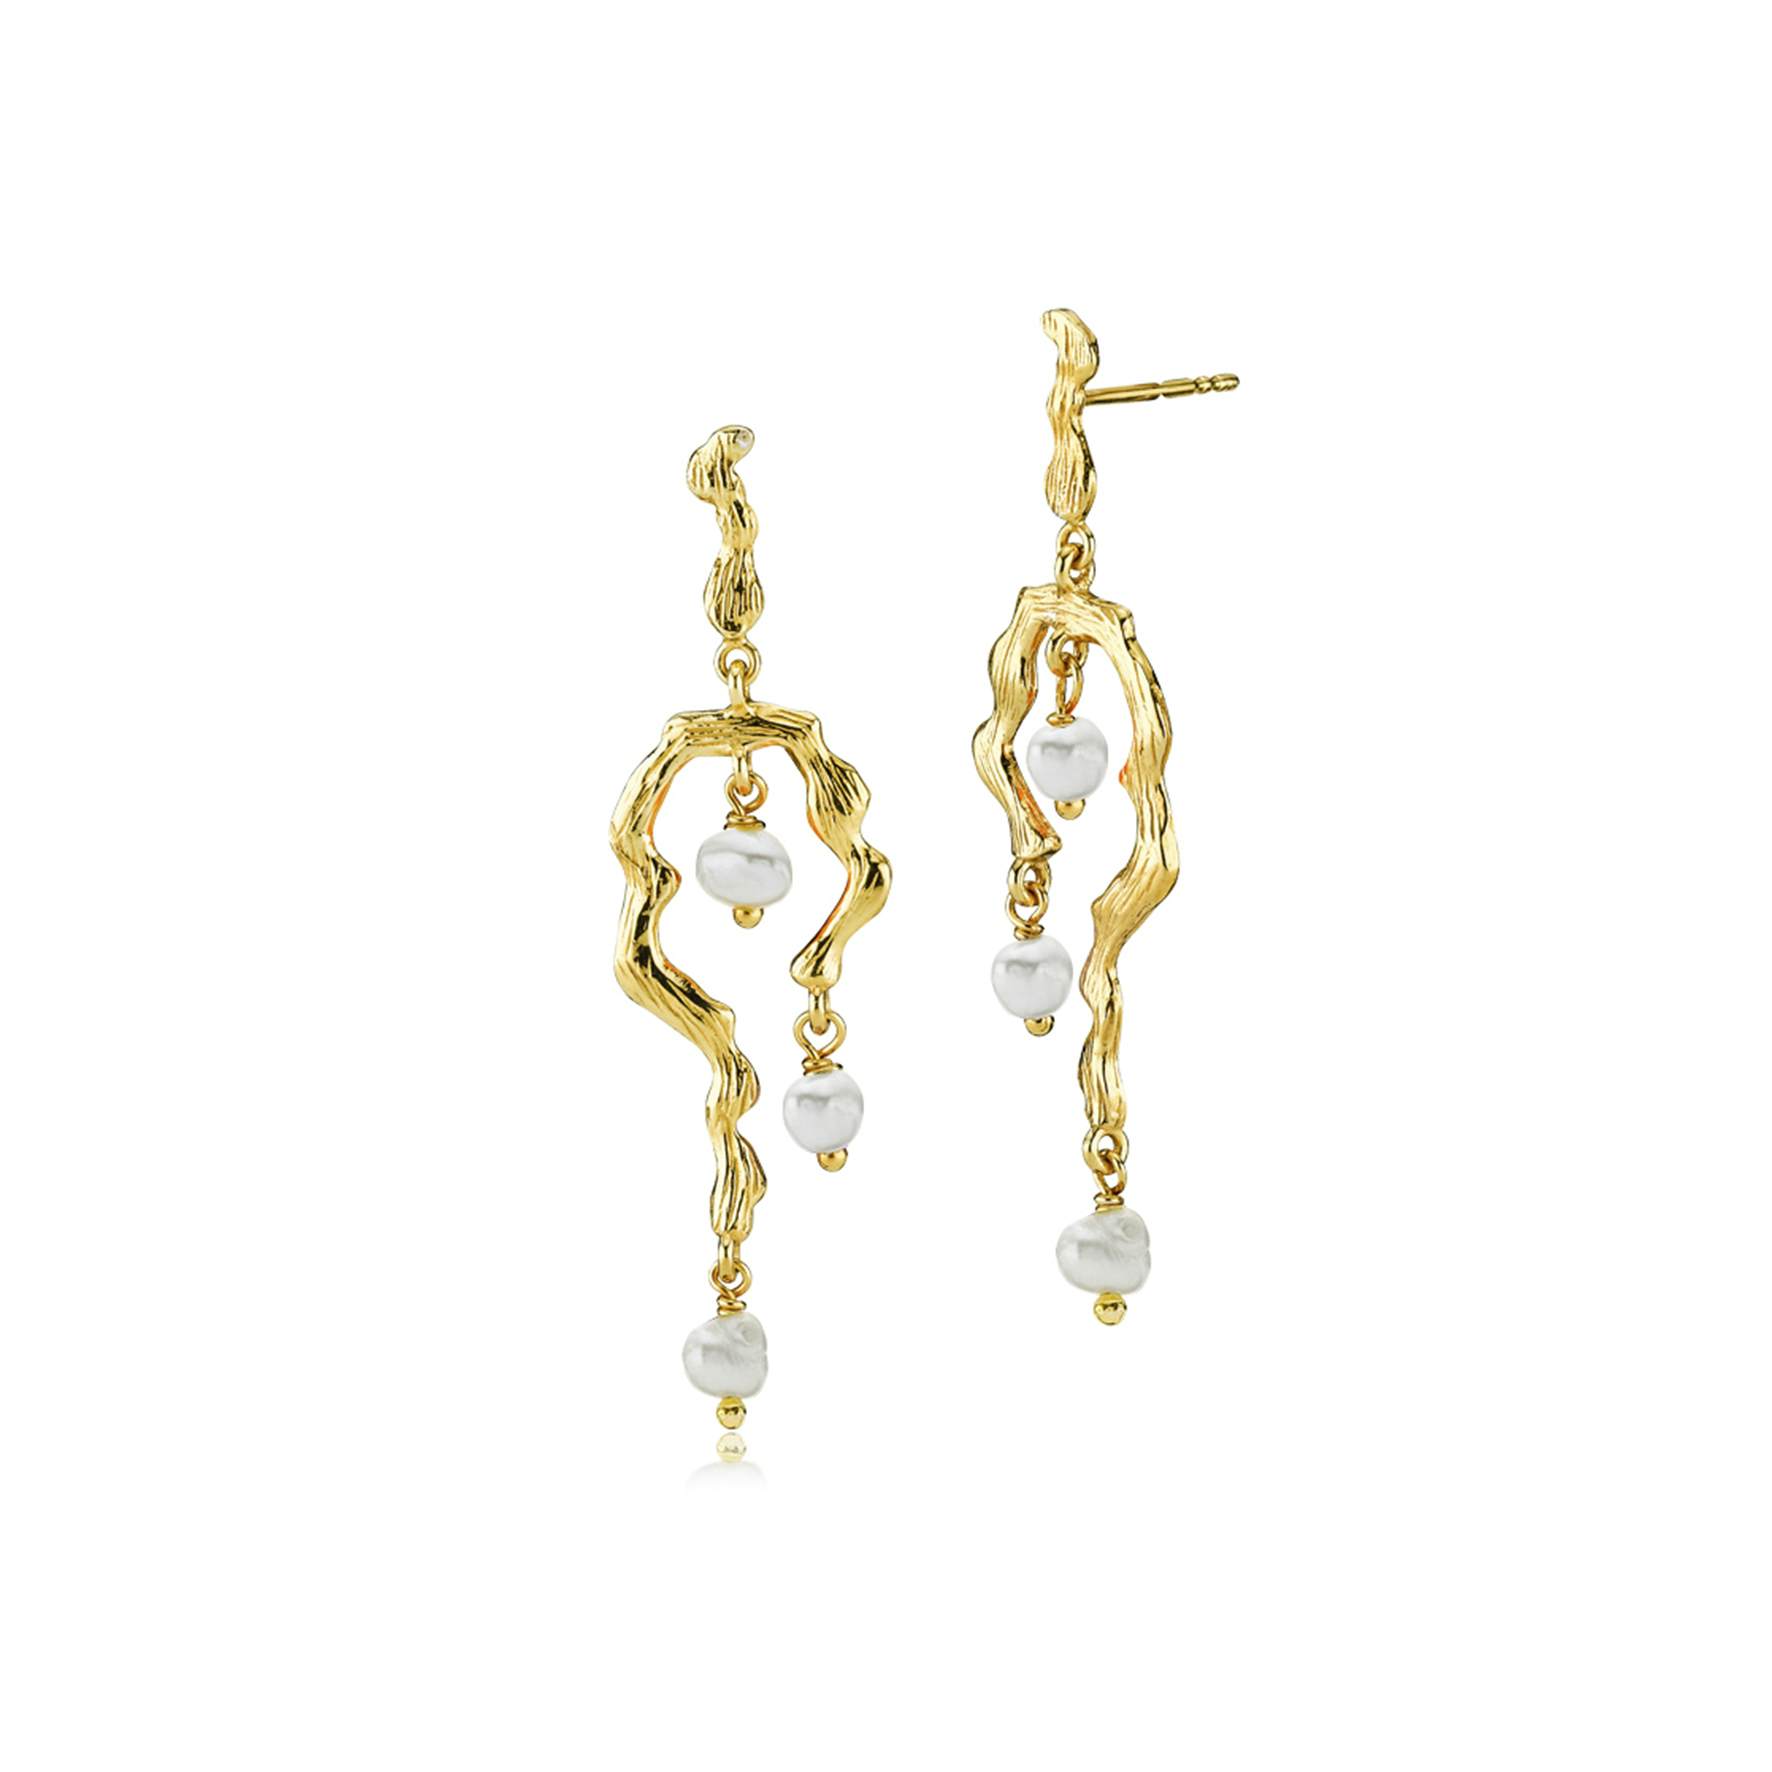 Lærke Bentsen By Sistie Long Earrings With Pearls fra Sistie i Forgyldt-Sølv Sterling 925